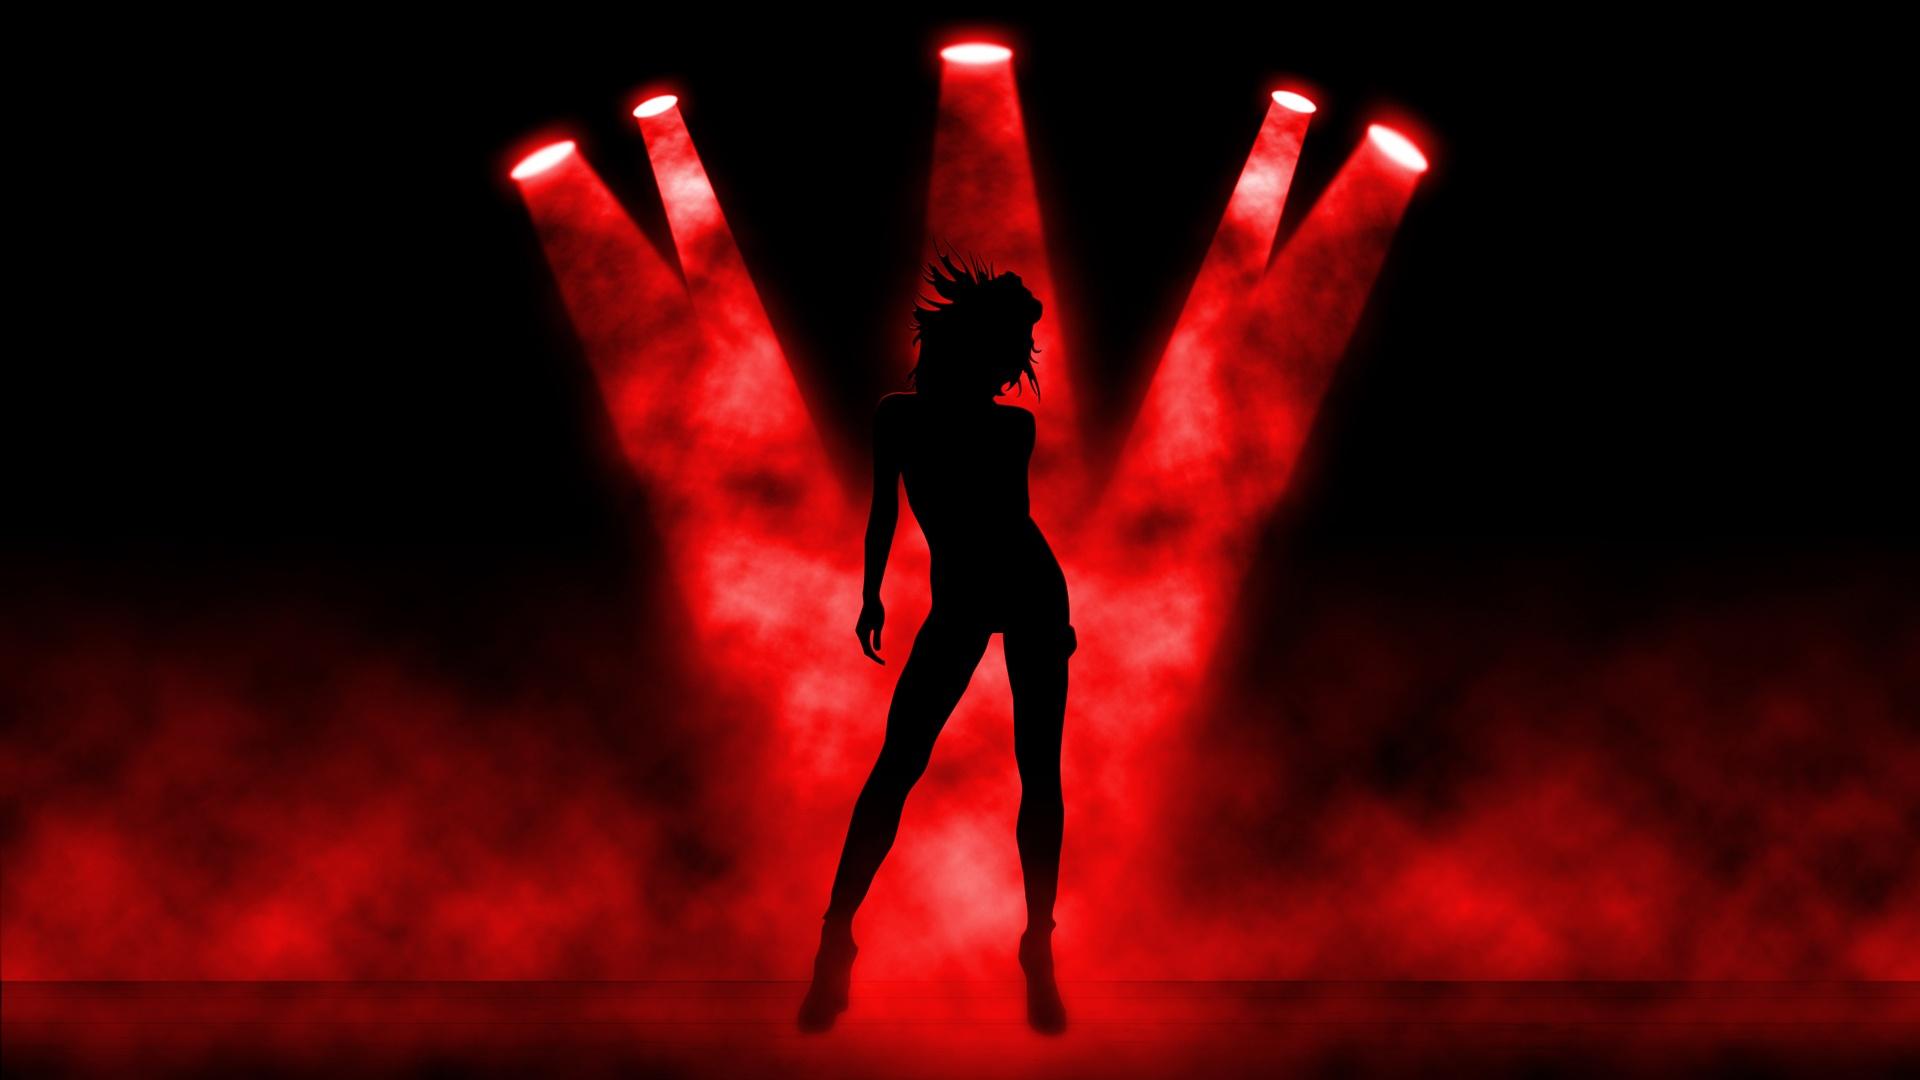 HD Dance Girl 1080p Wallpaper in jpg format for free download